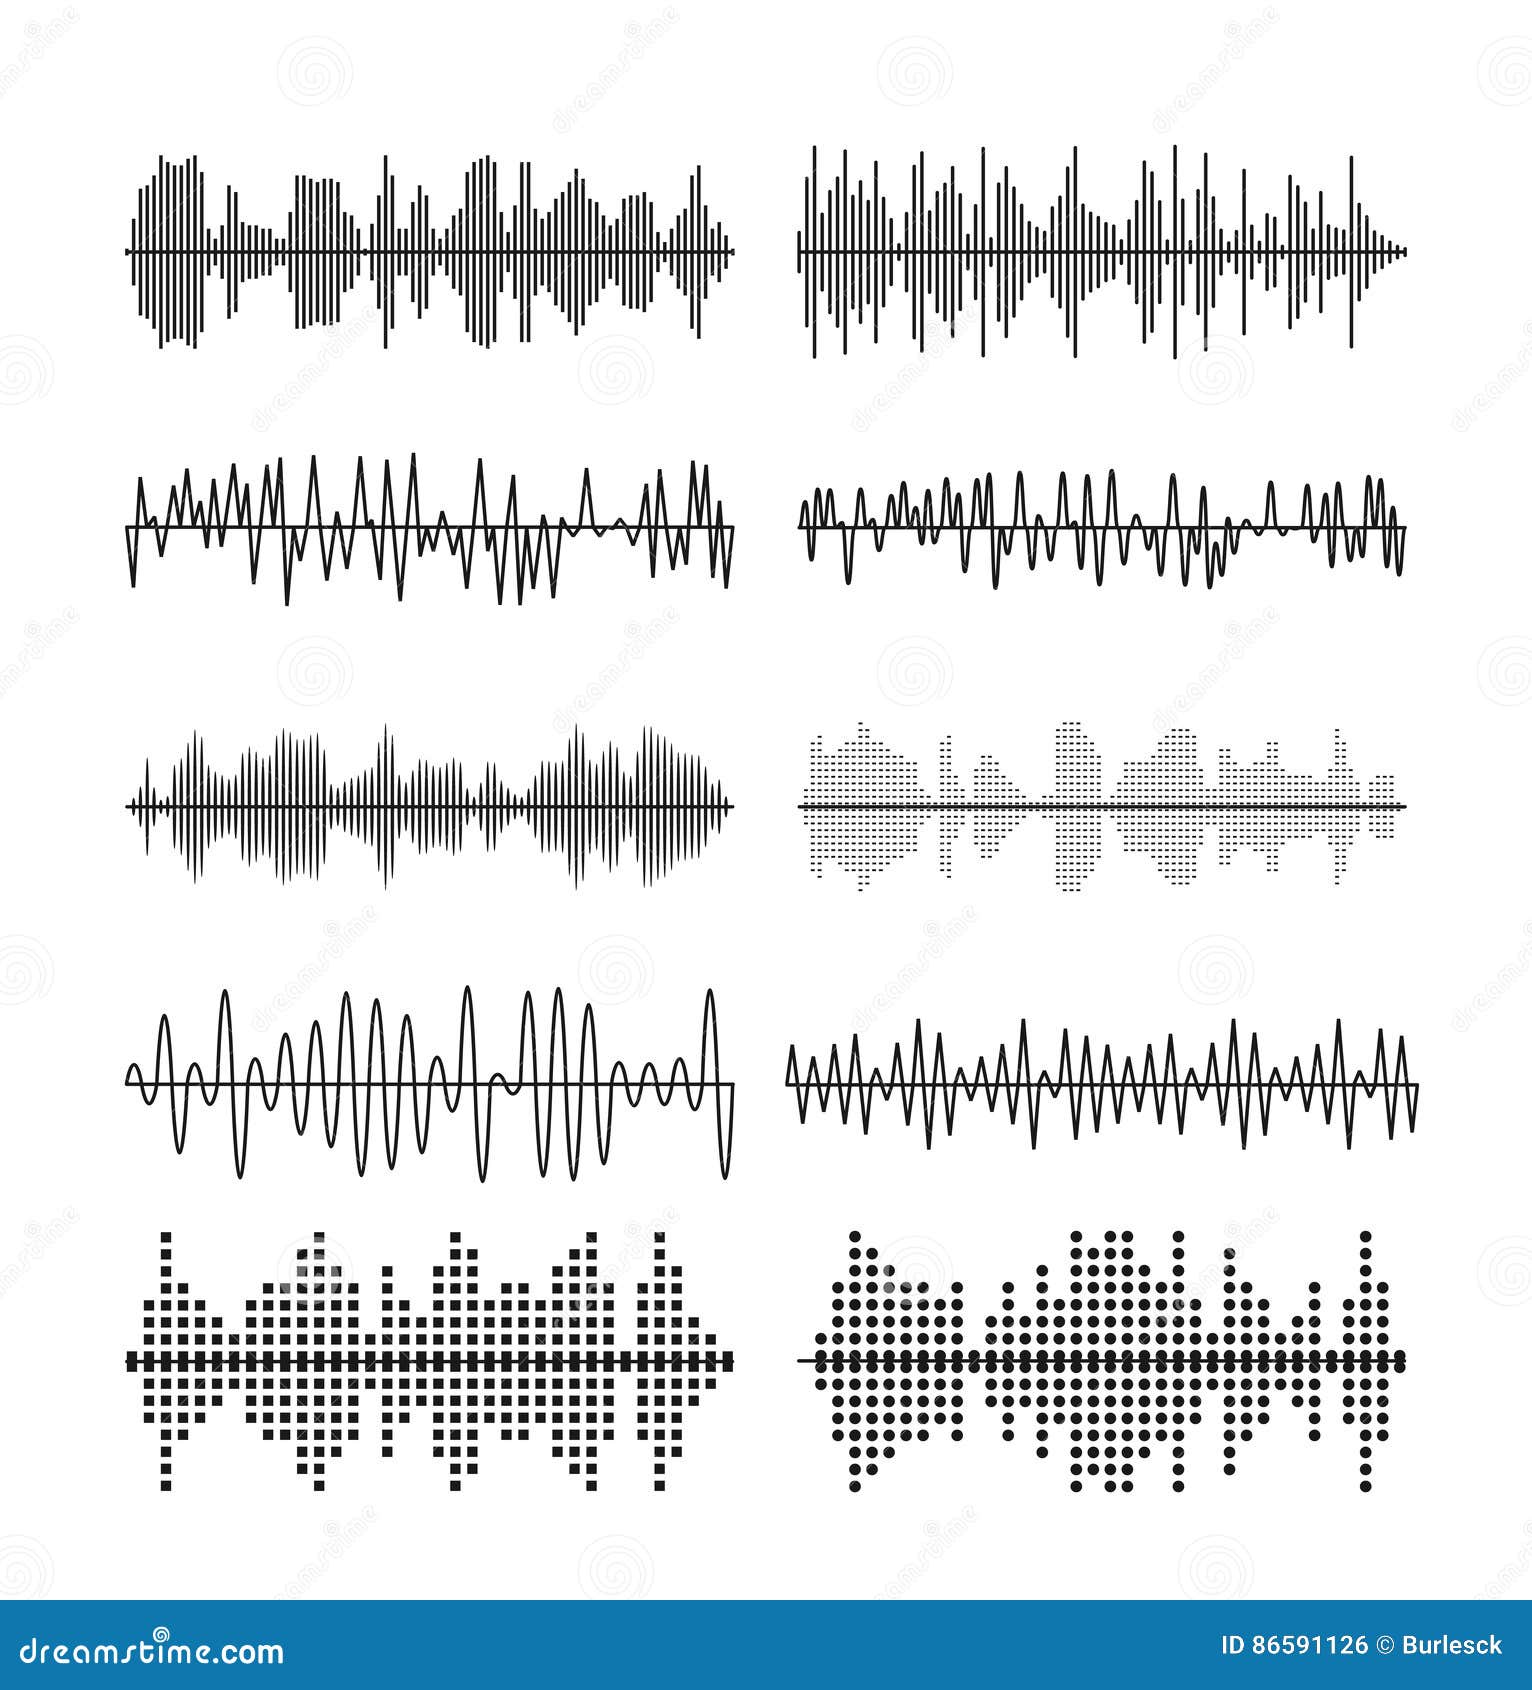 sound wave forms  . soundtrack audio music amplitude waveforms equalizer